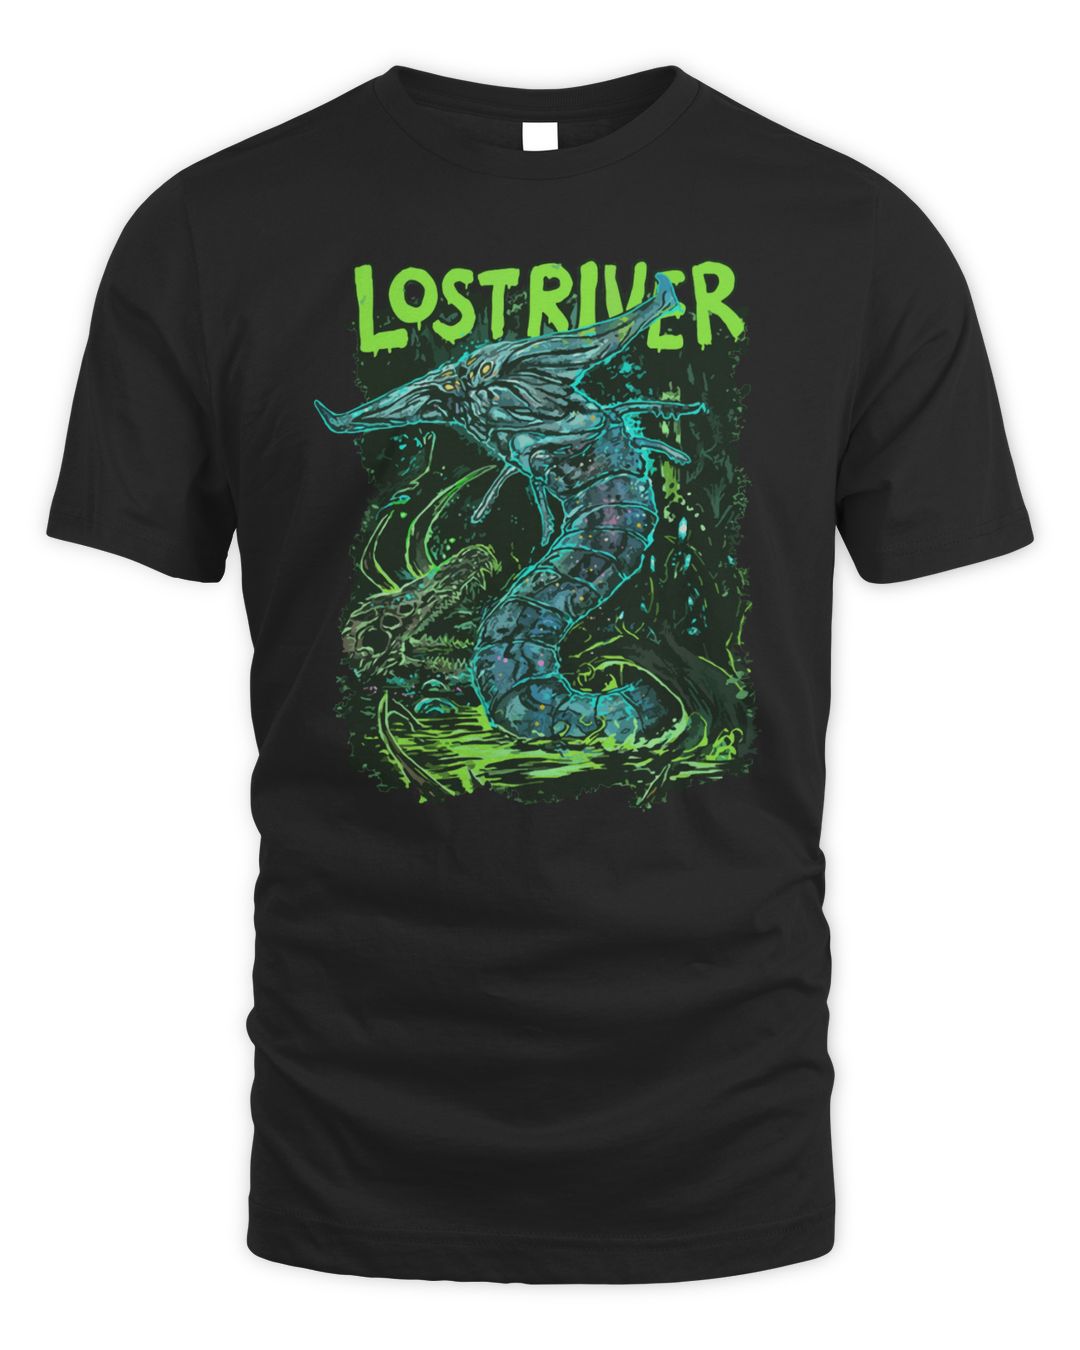 Subnautica Merch Lost River Shirt